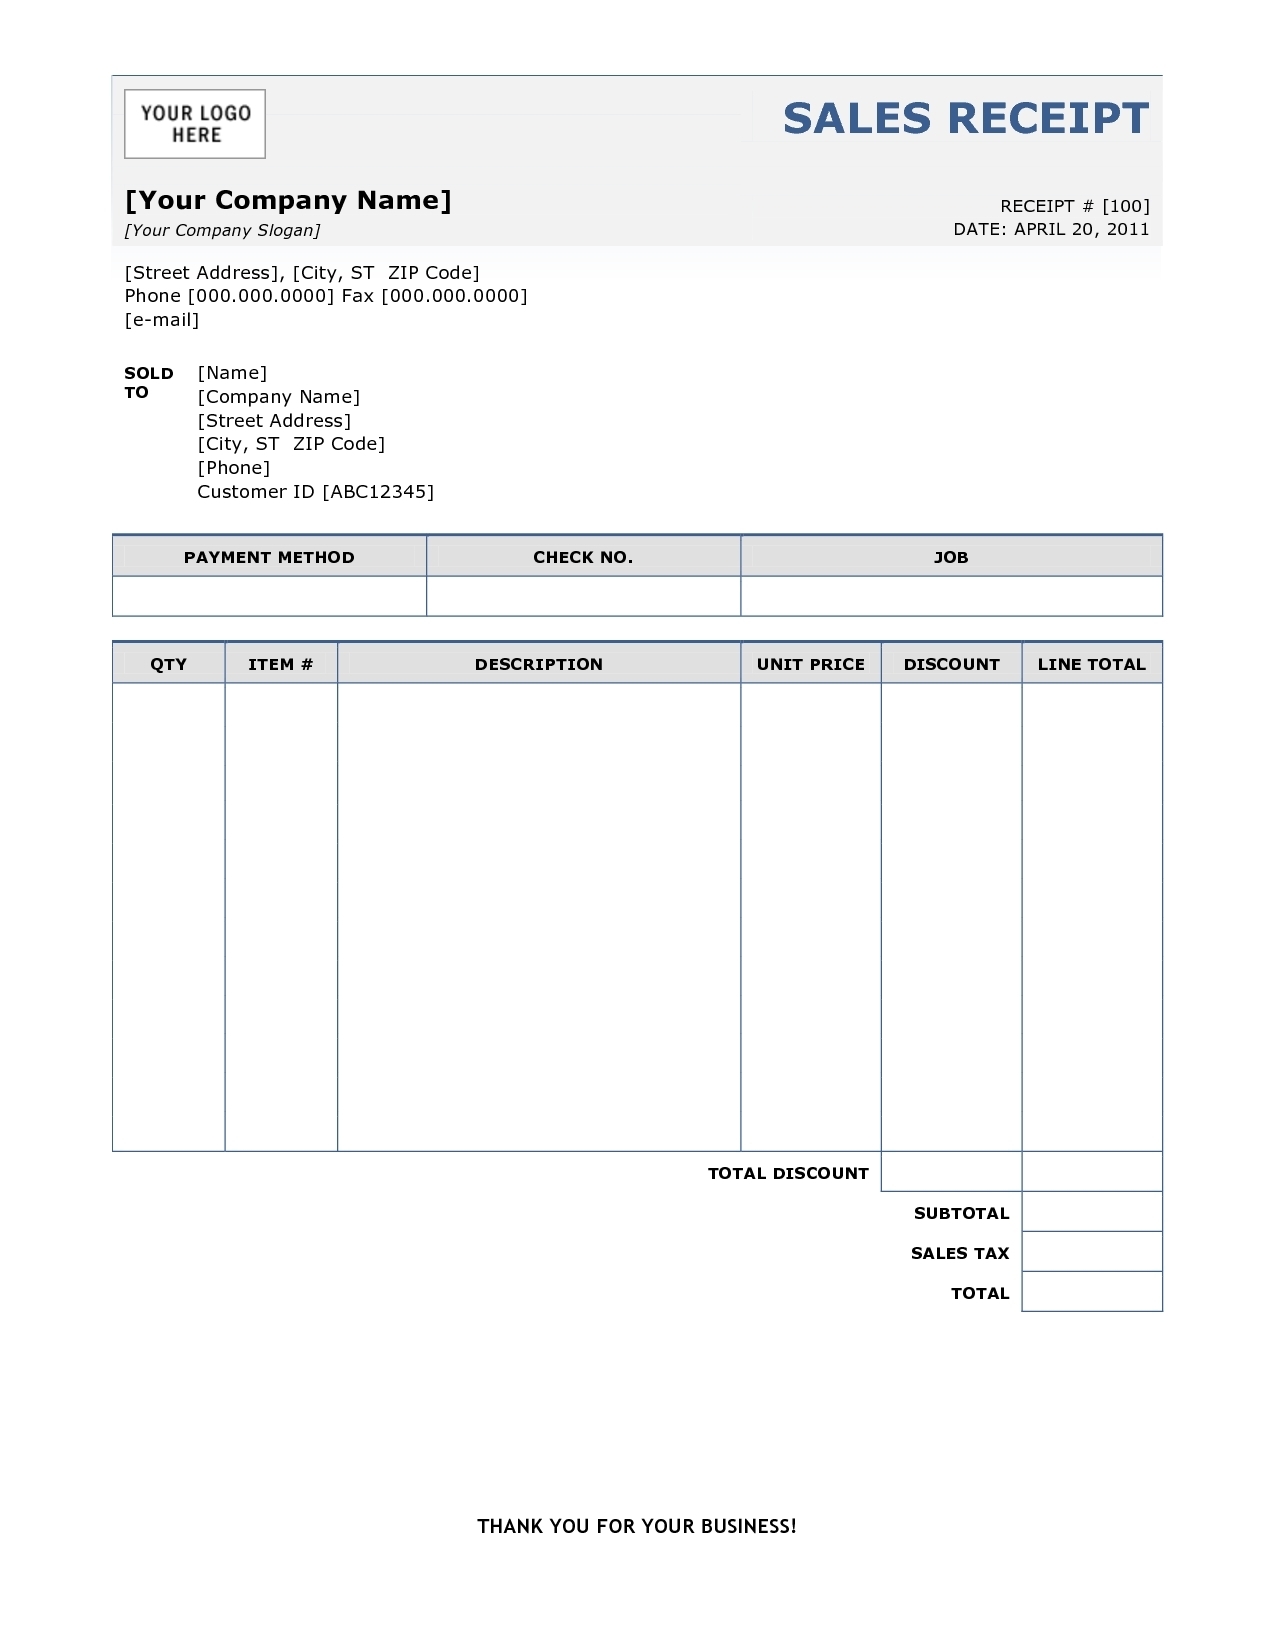 receipt of invoice receipt invoice template invoice example 1275 X 1650